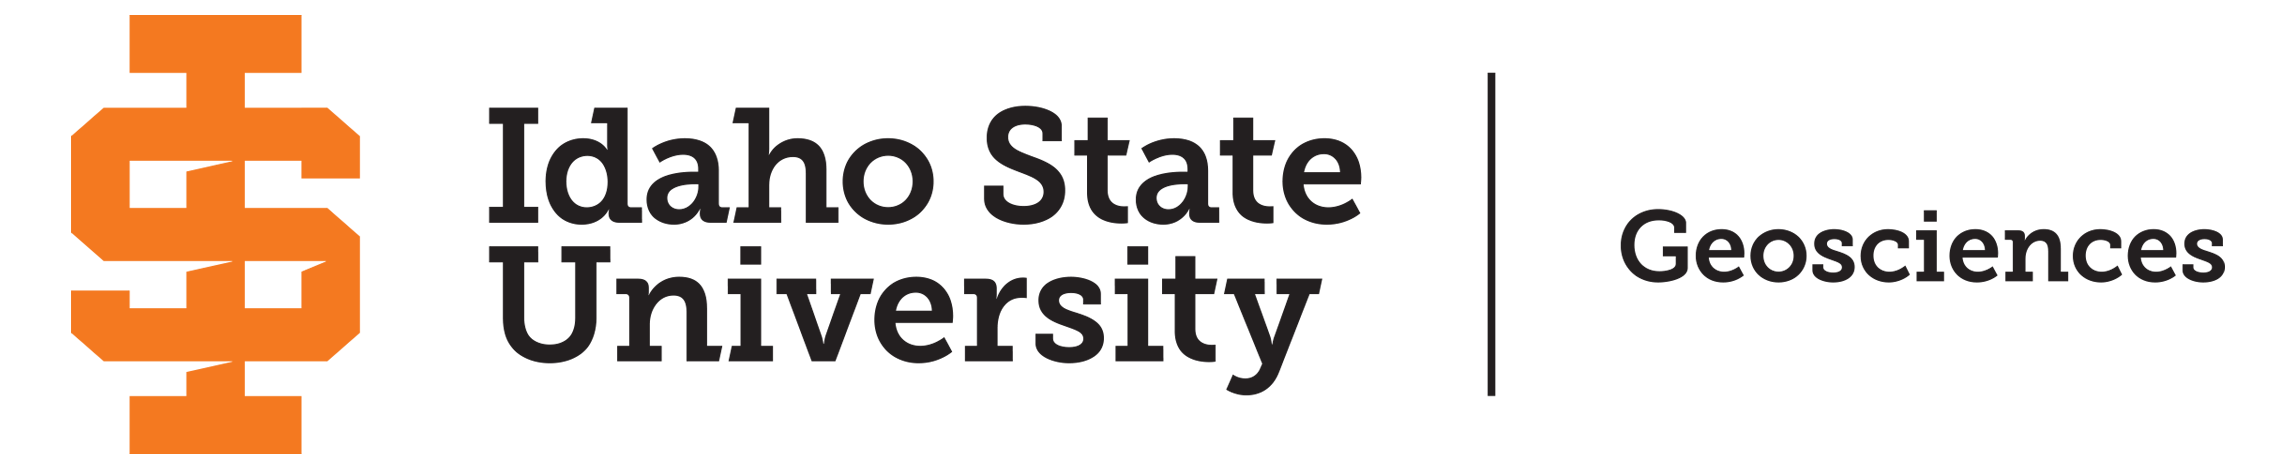 ISU Geosciences logo